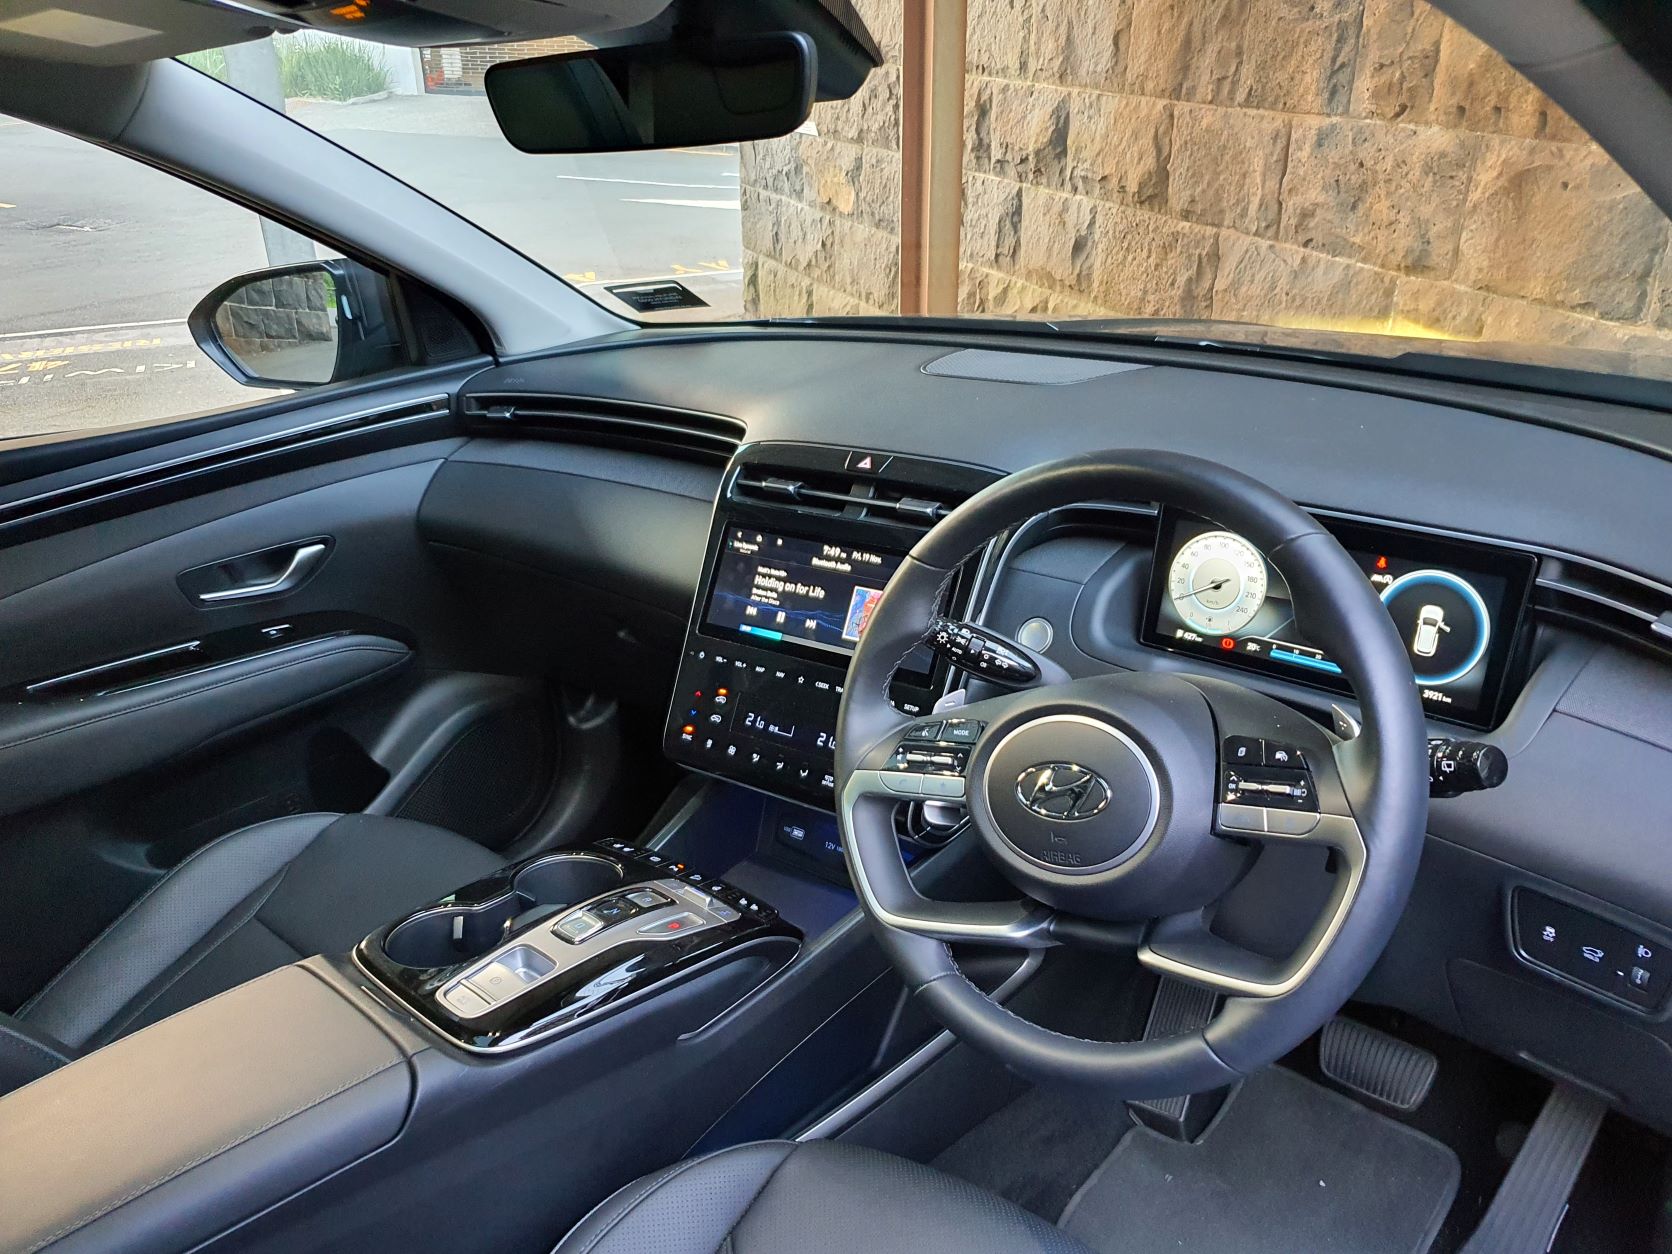 Interior view of the 2021 Hyundai Tucson